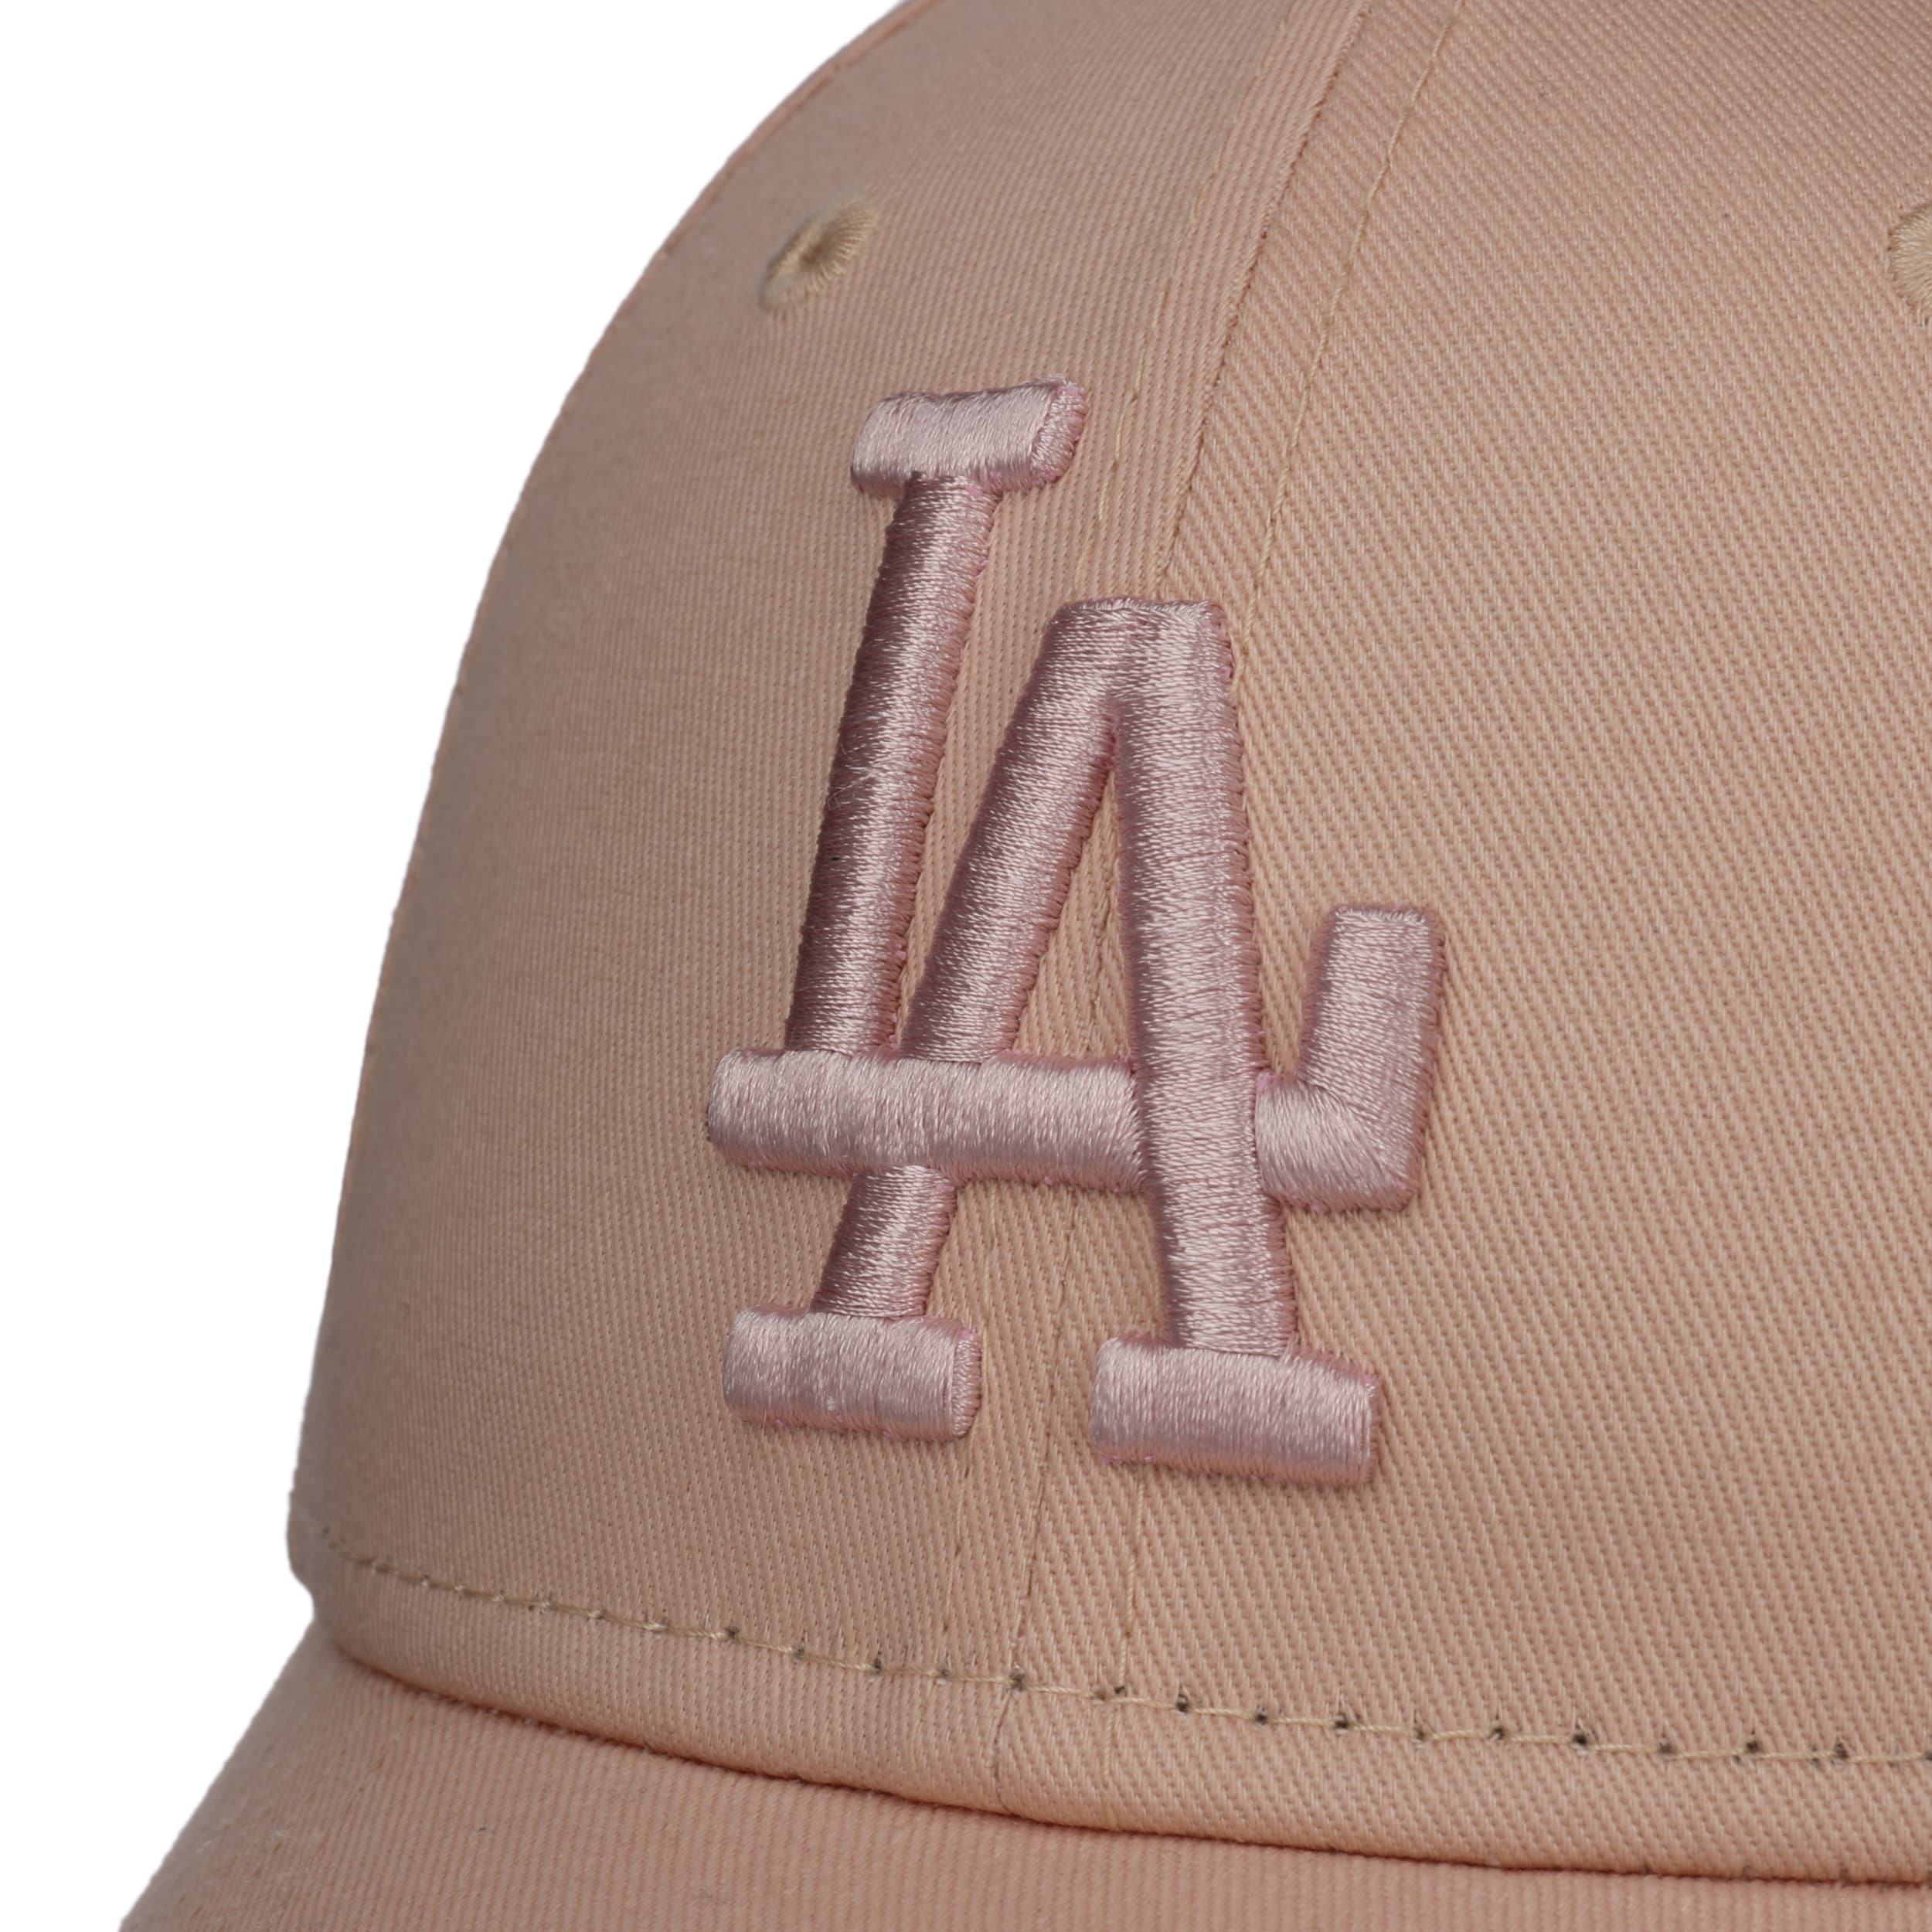 New Era League Essential 9Twenty Los Angeles Dodgers Cap (brown)